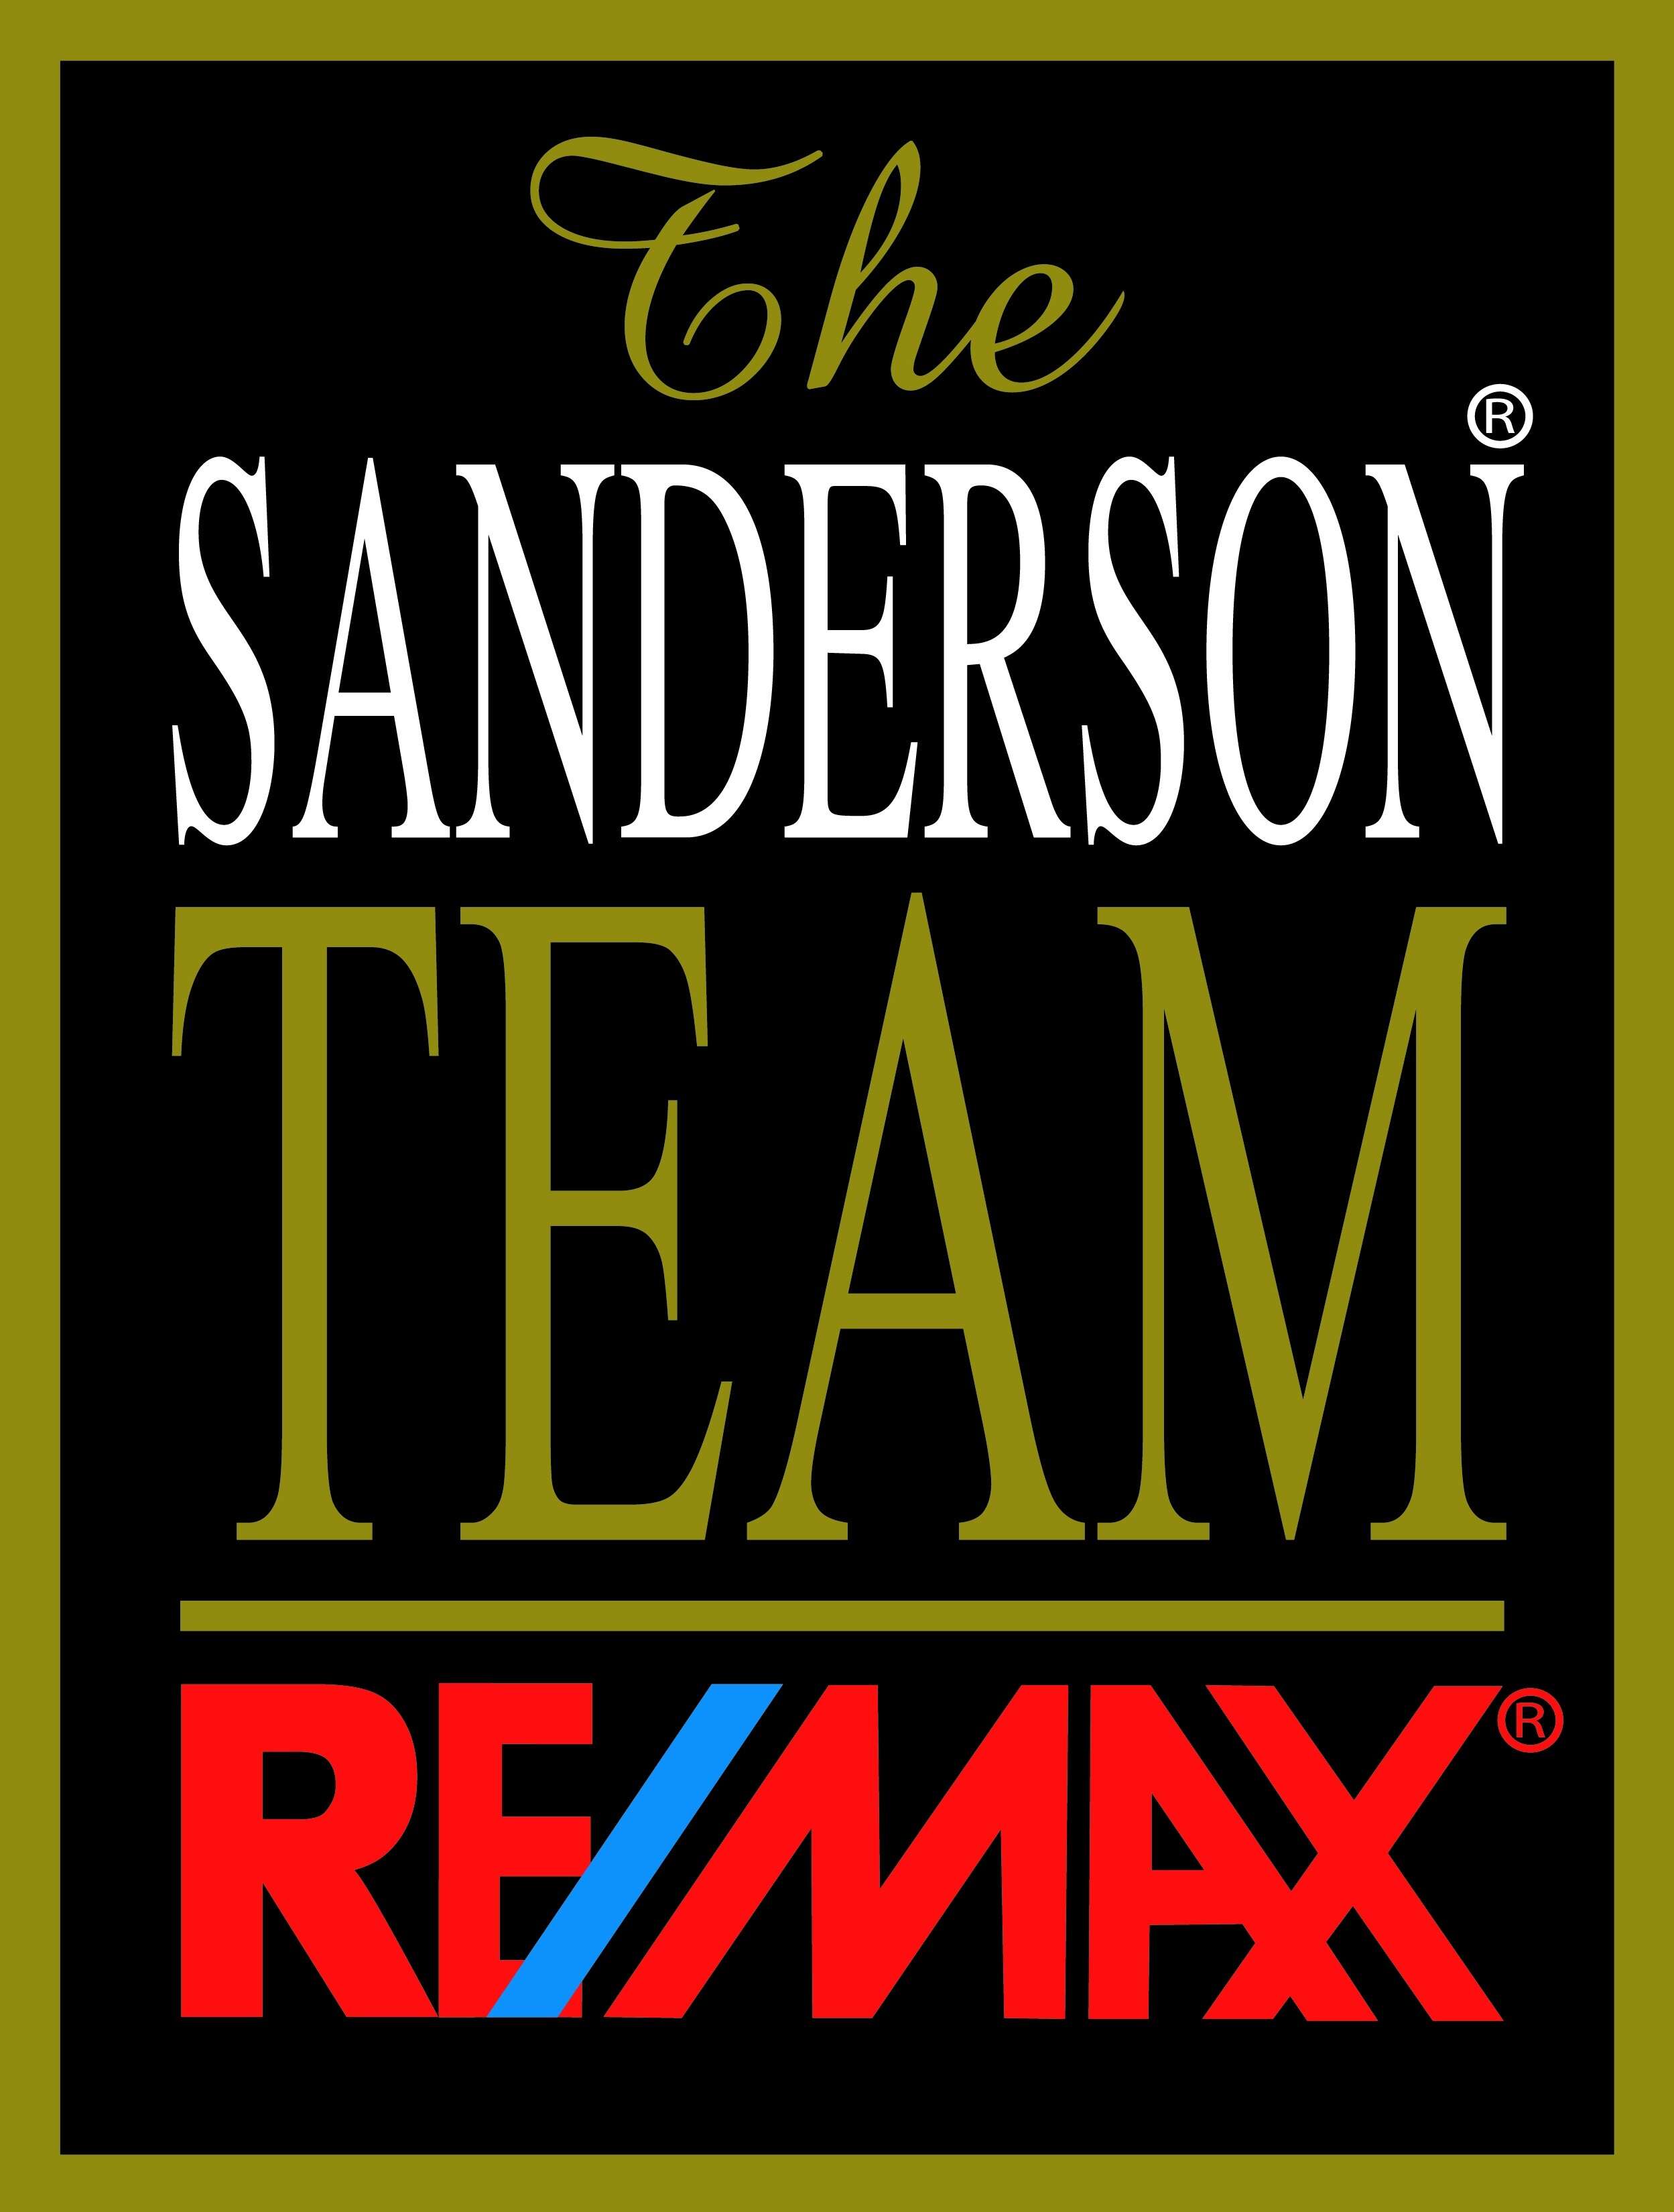 Rob Sanderson Remax